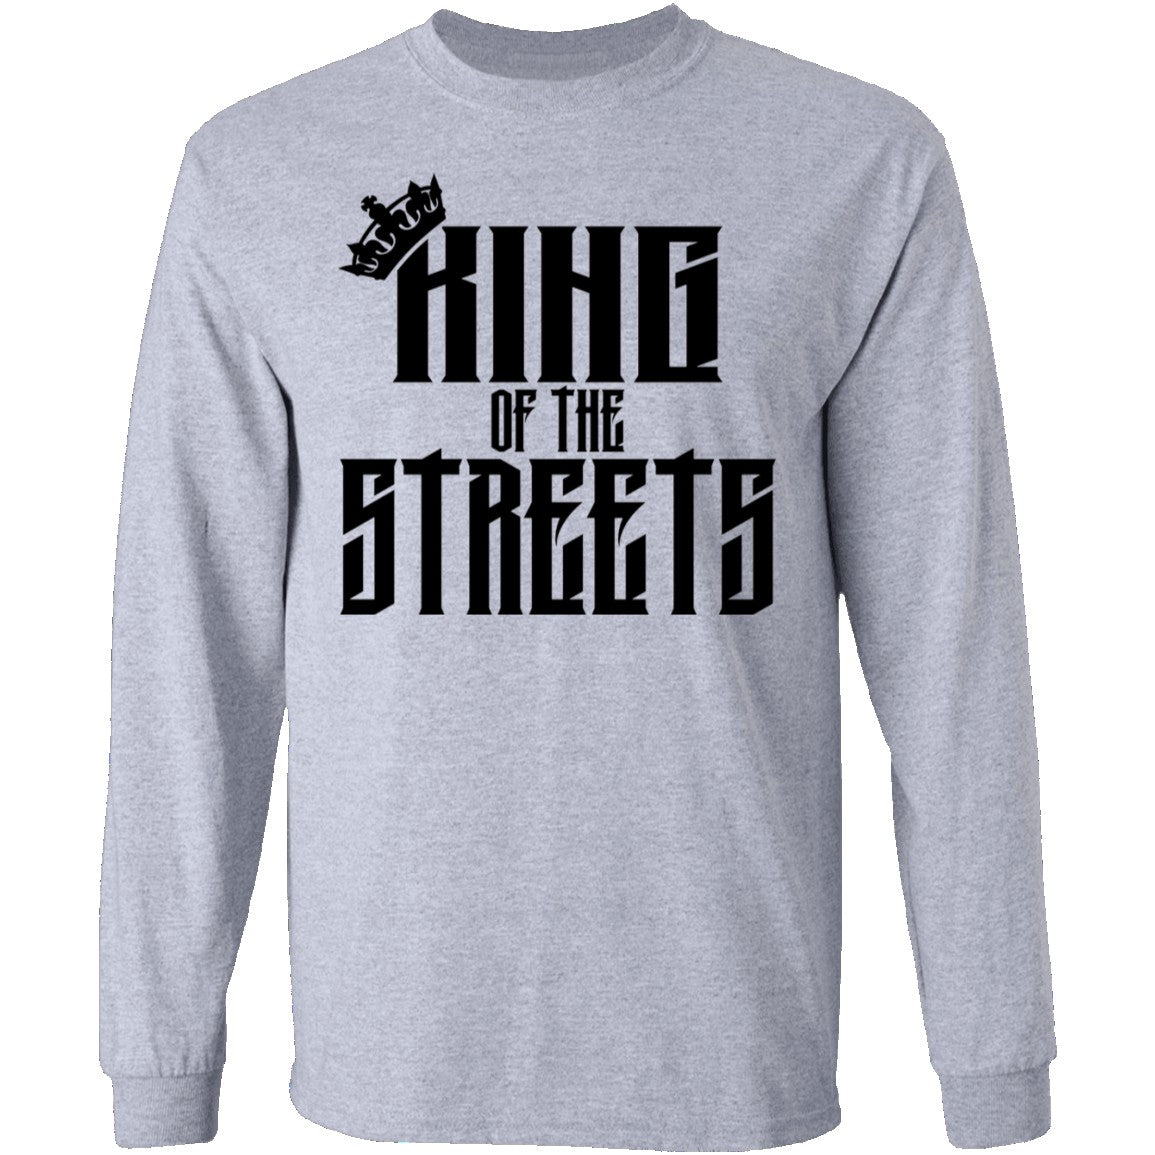 King of the Streets LS Ultra Cotton T-Shirt freeshipping - Bedroka Streetwear LLC